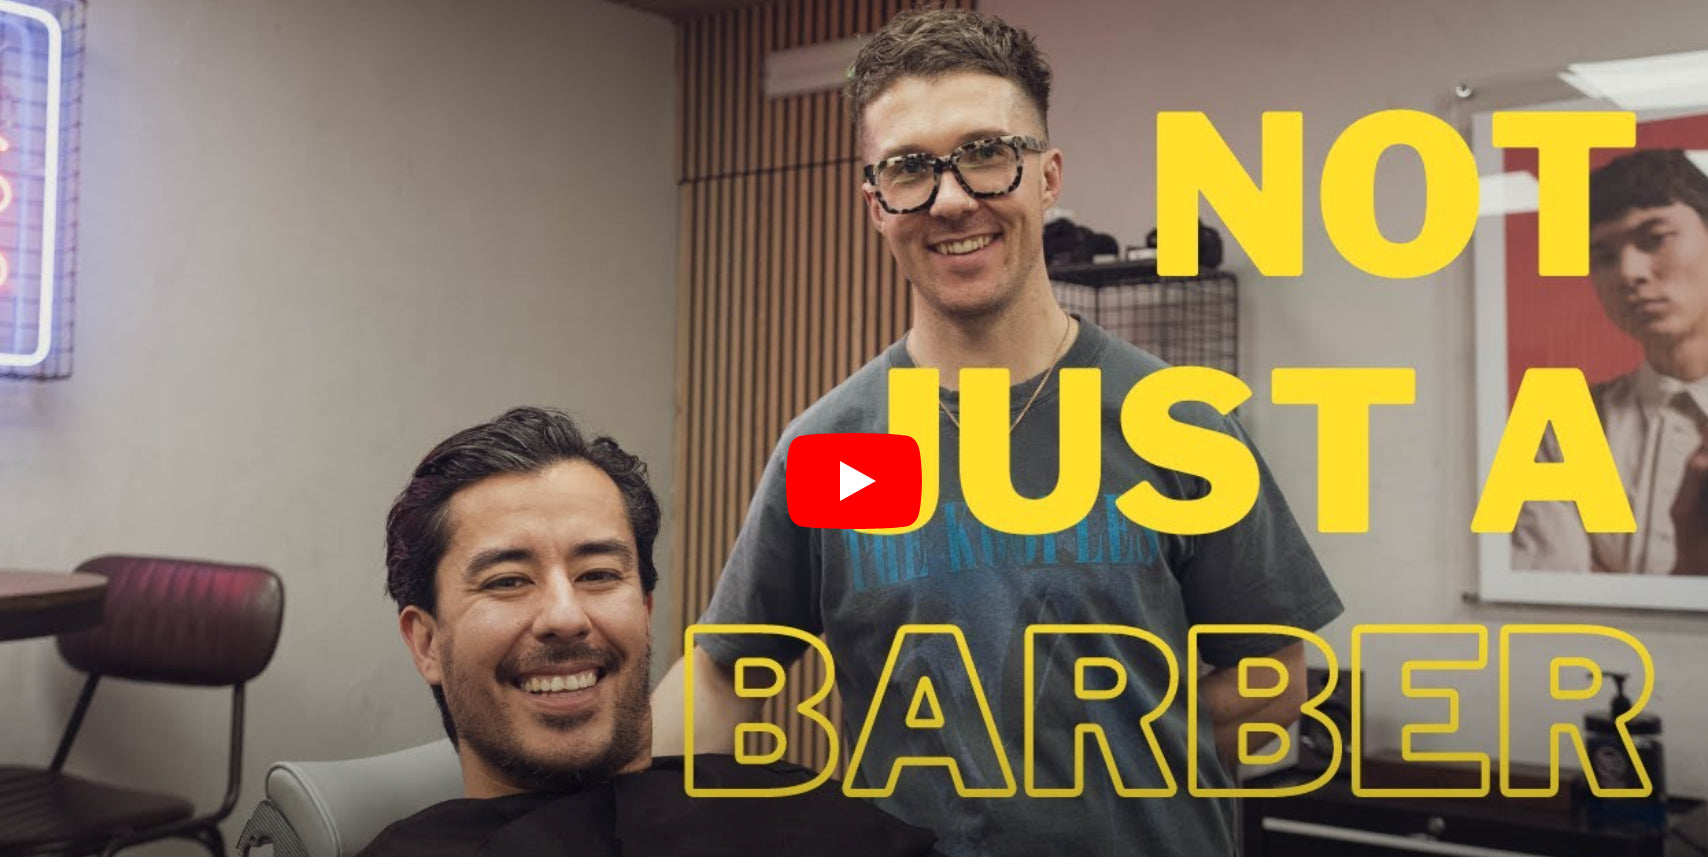 Video: Not Just a Barber Episode 3 - Elliot Forbes